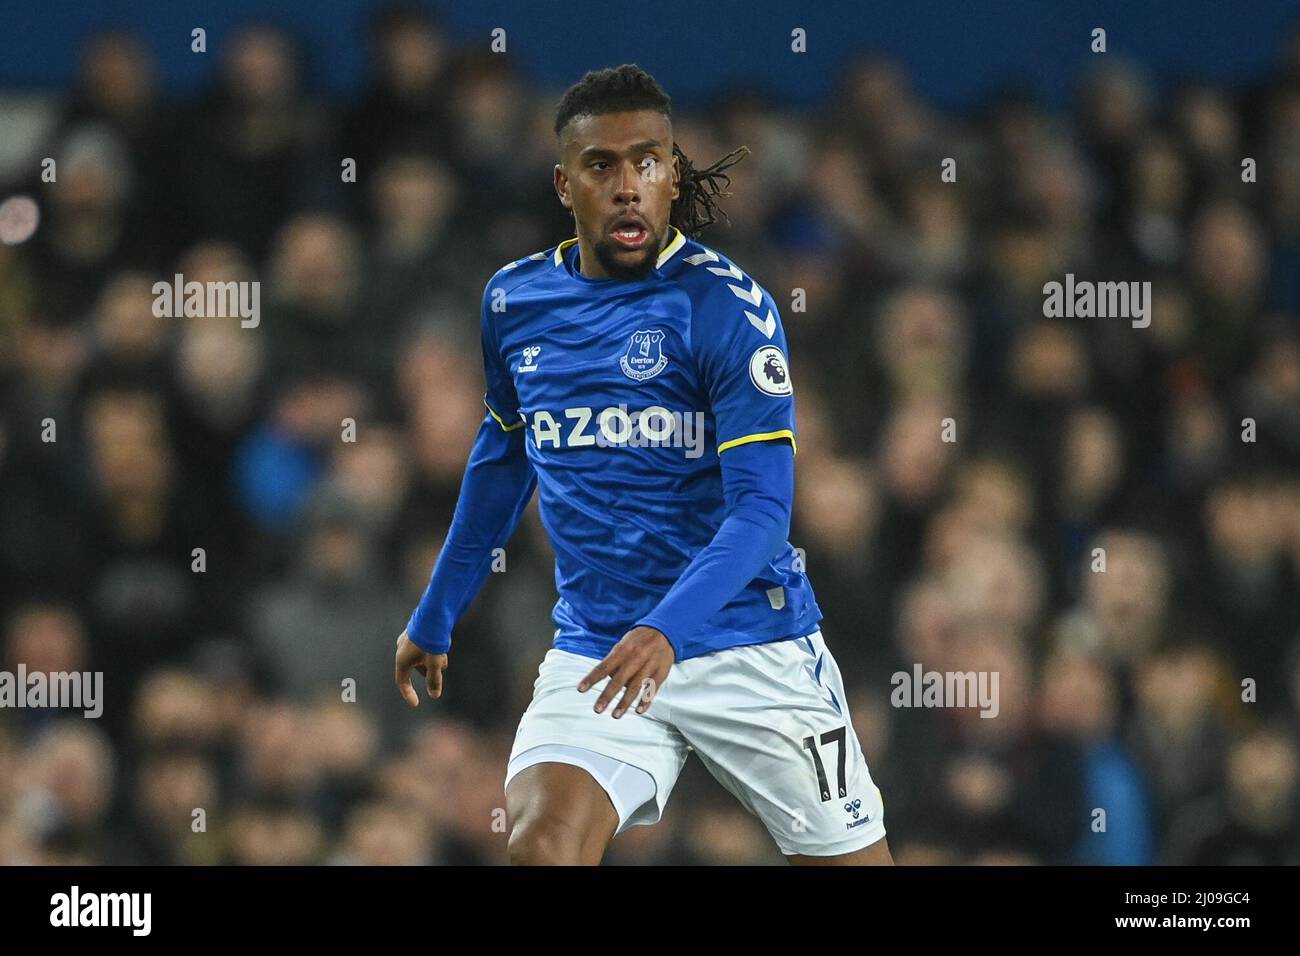 Alex Iwobi #17 of Everton during the game Stock Photo